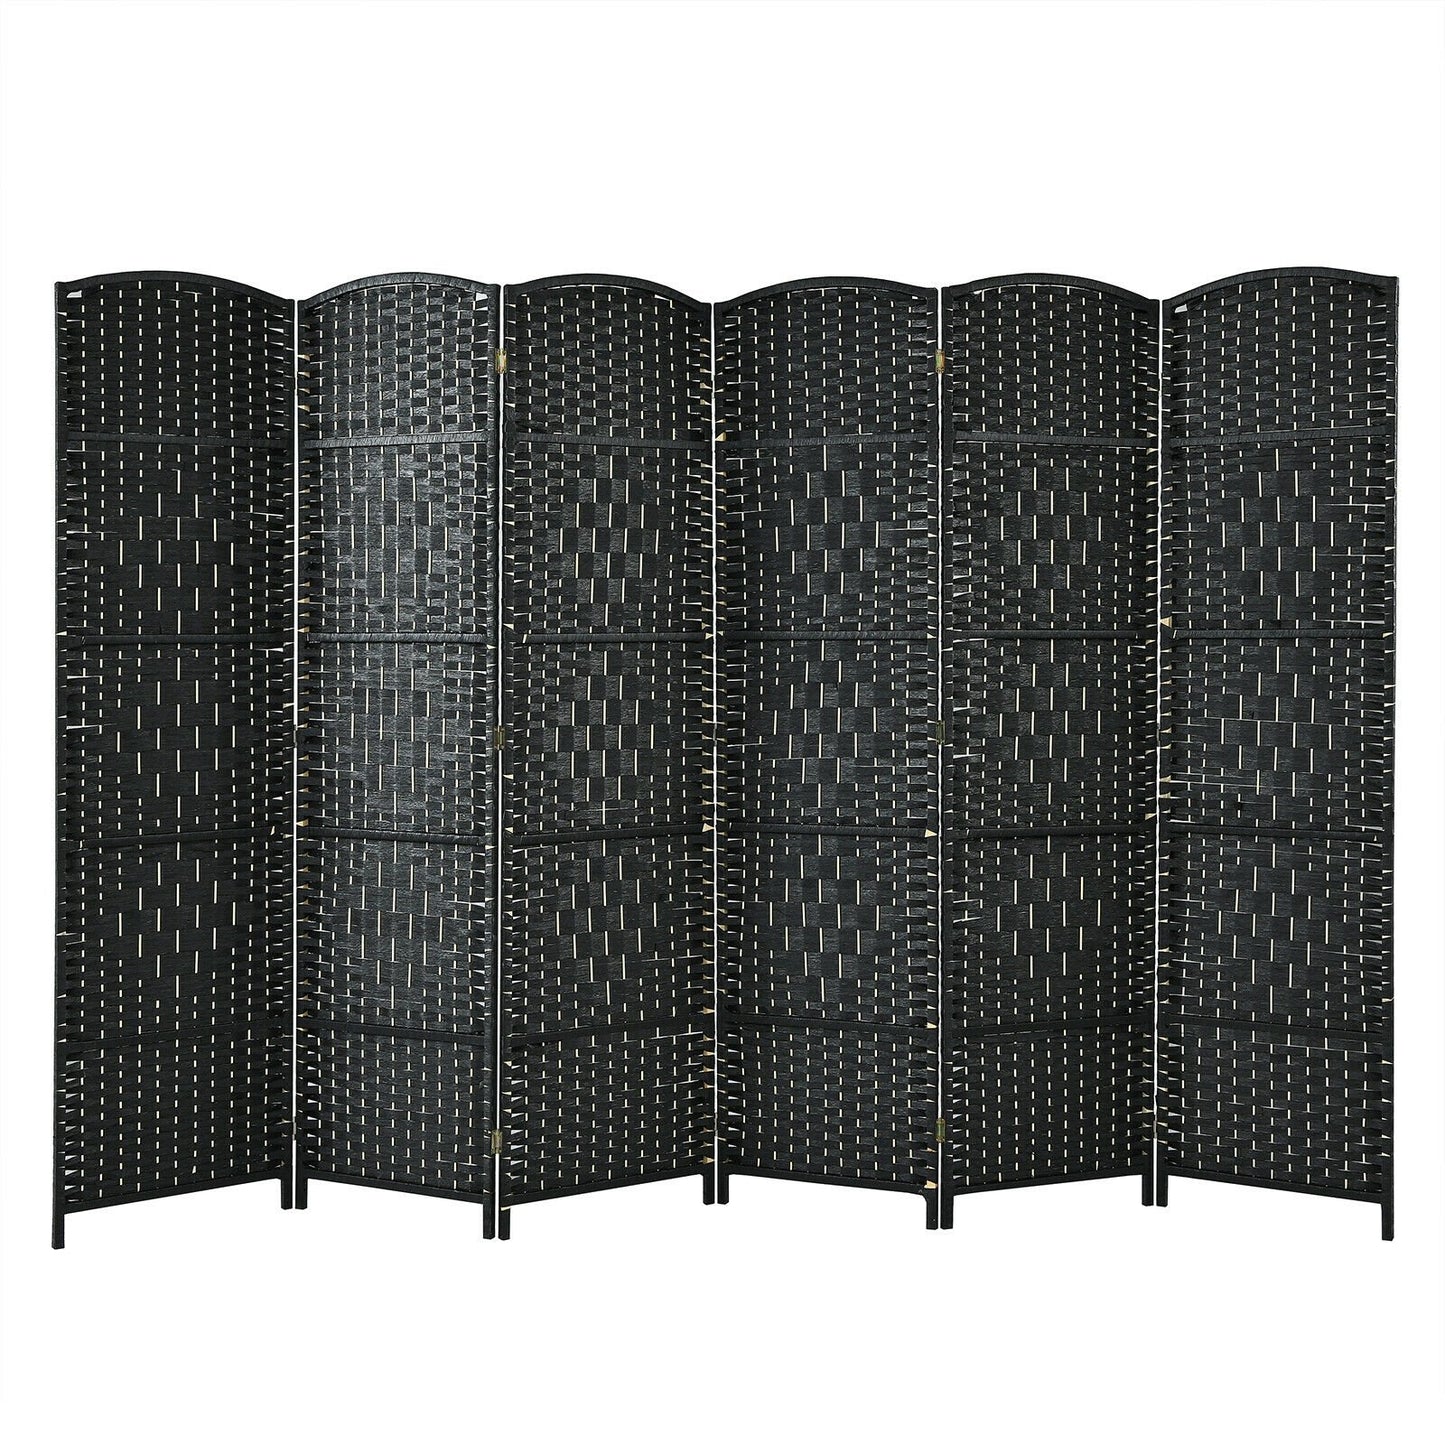 6.5Ft 6-Panel Weave Folding Fiber Room Divider Screen, Black - Gallery Canada